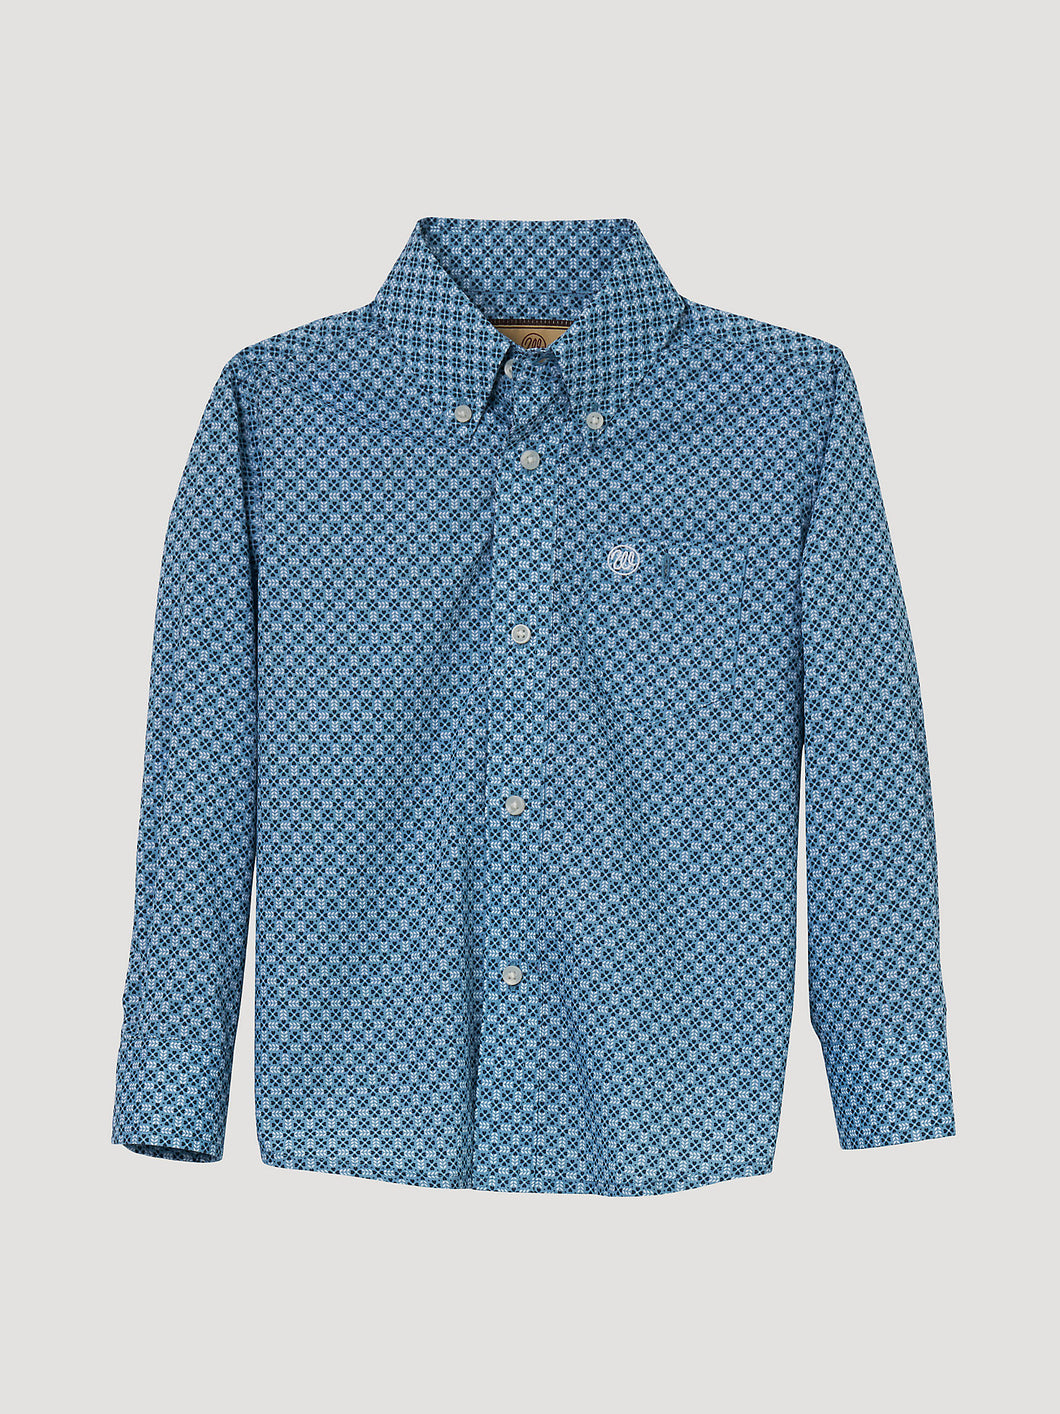 Boy's Wrangler Classic Long Sleeve Shirt 44423